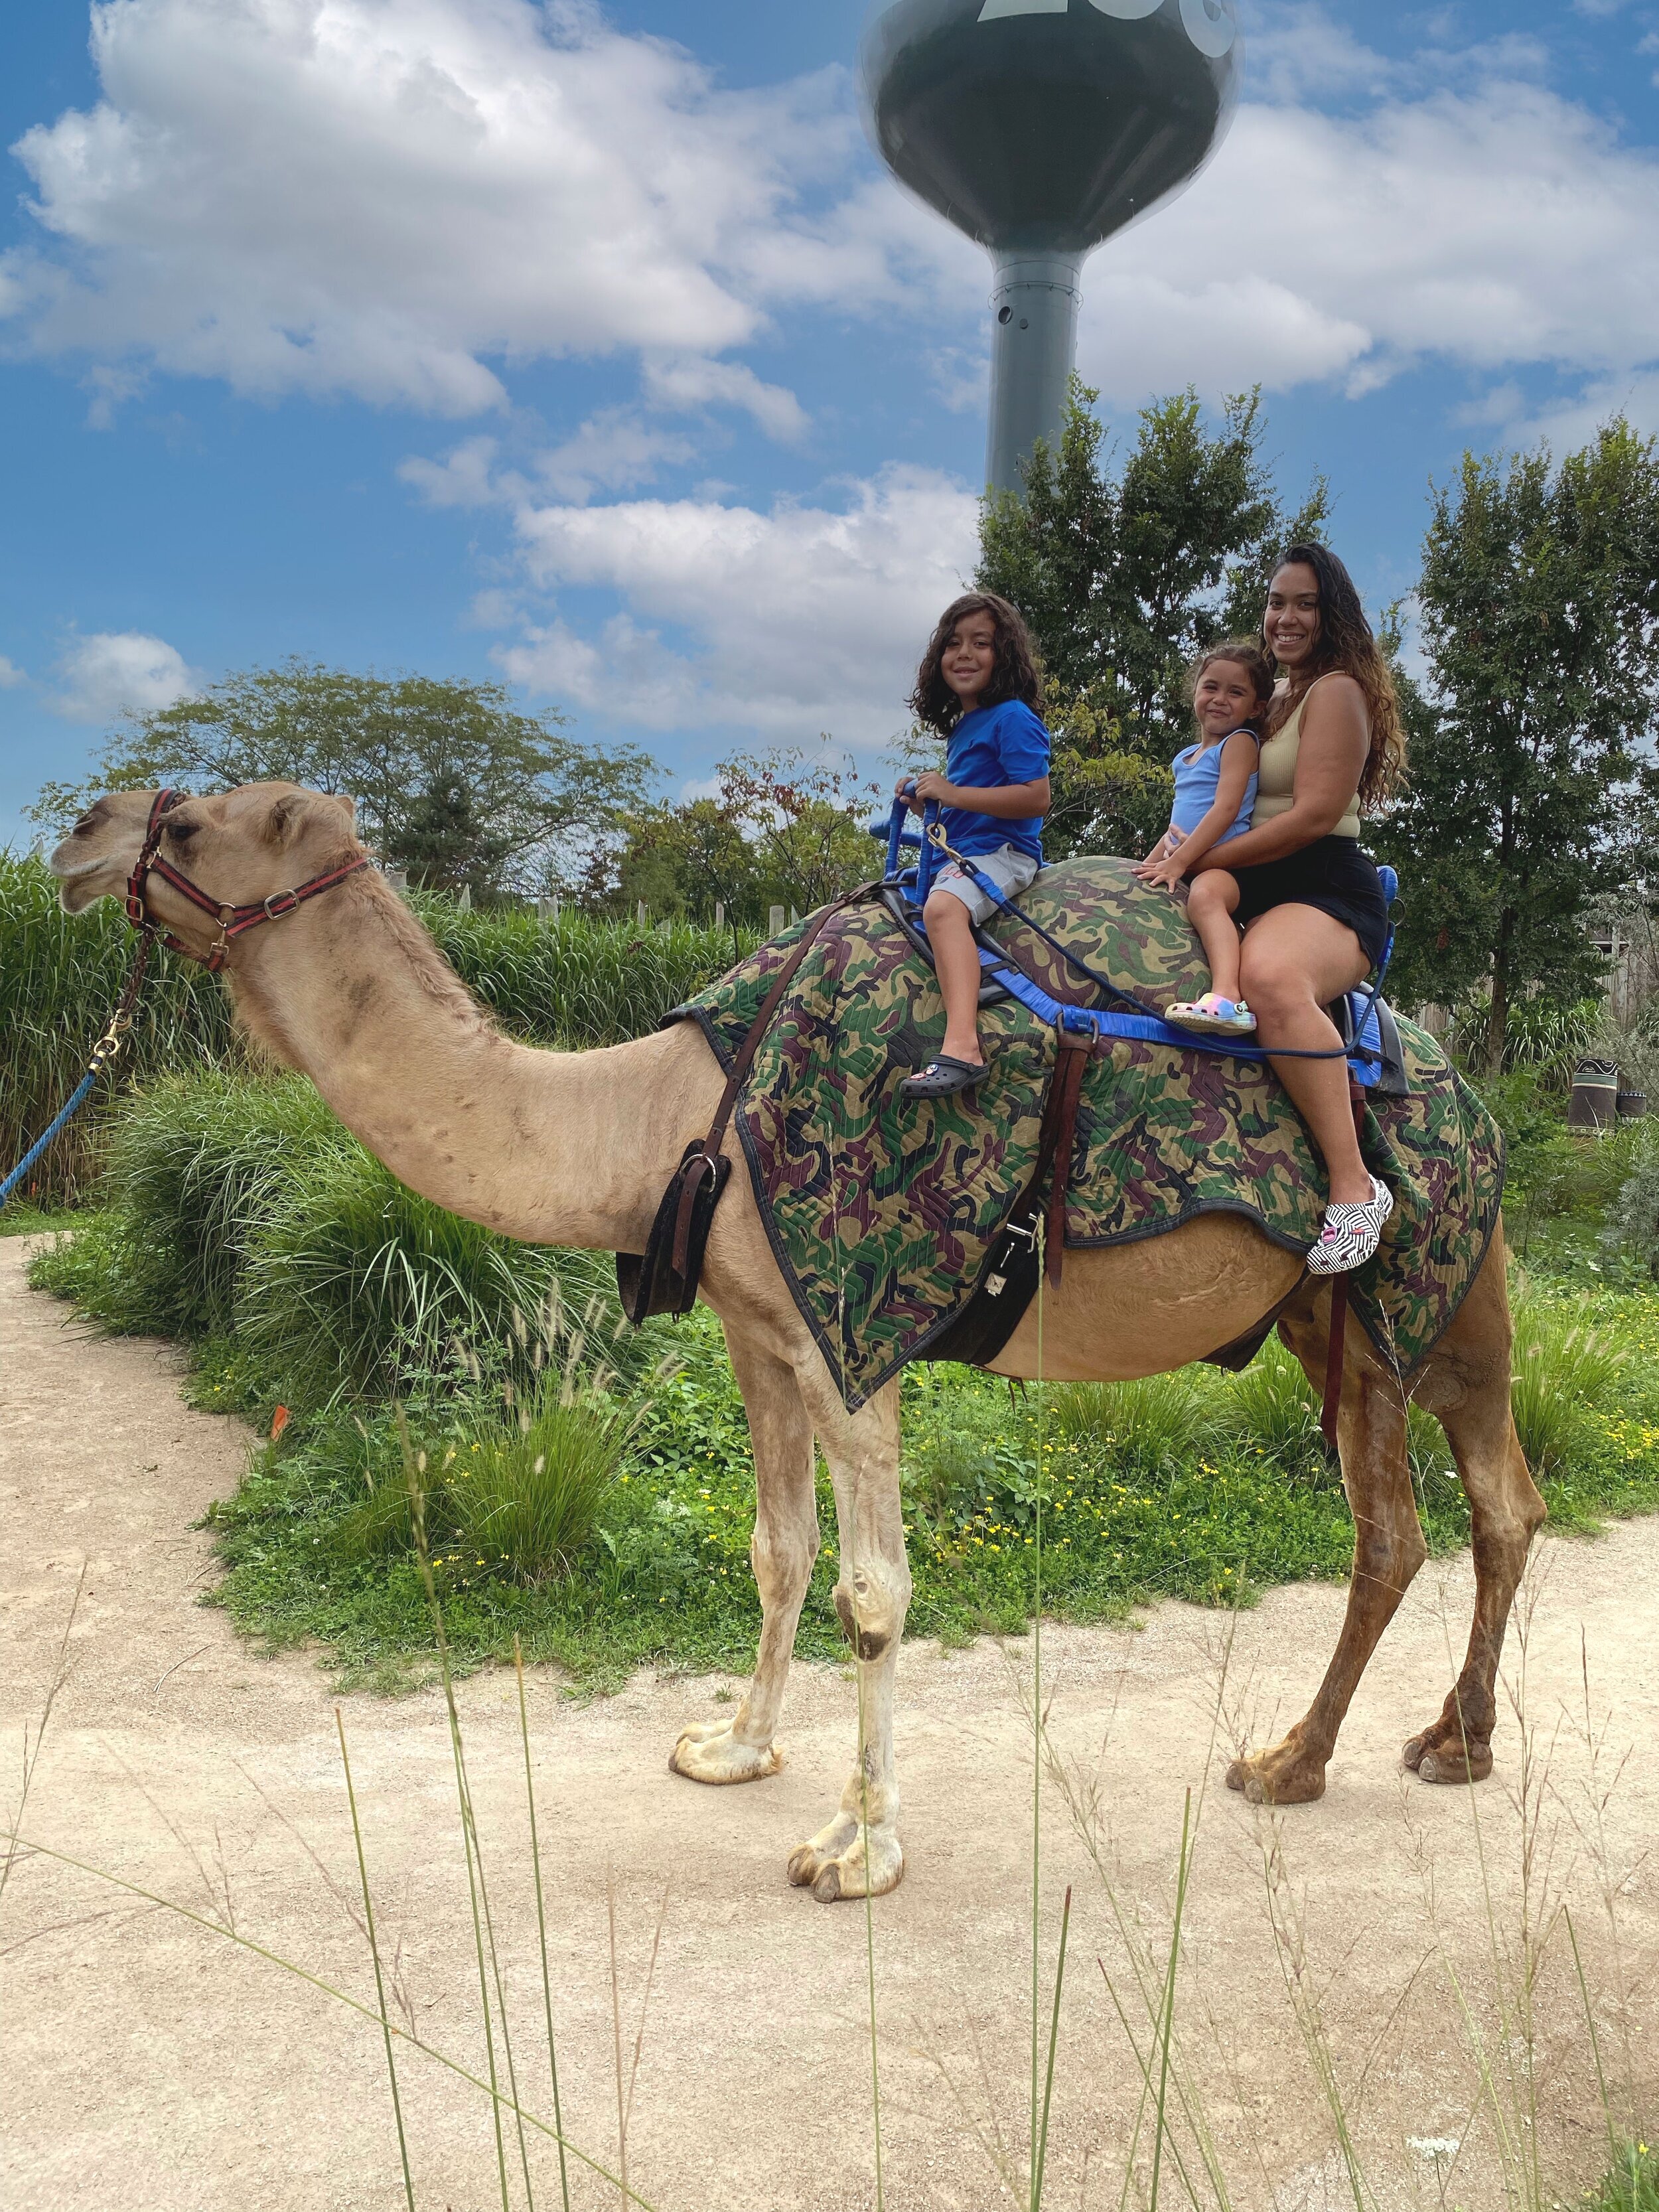 Columbus Zoo camel ride